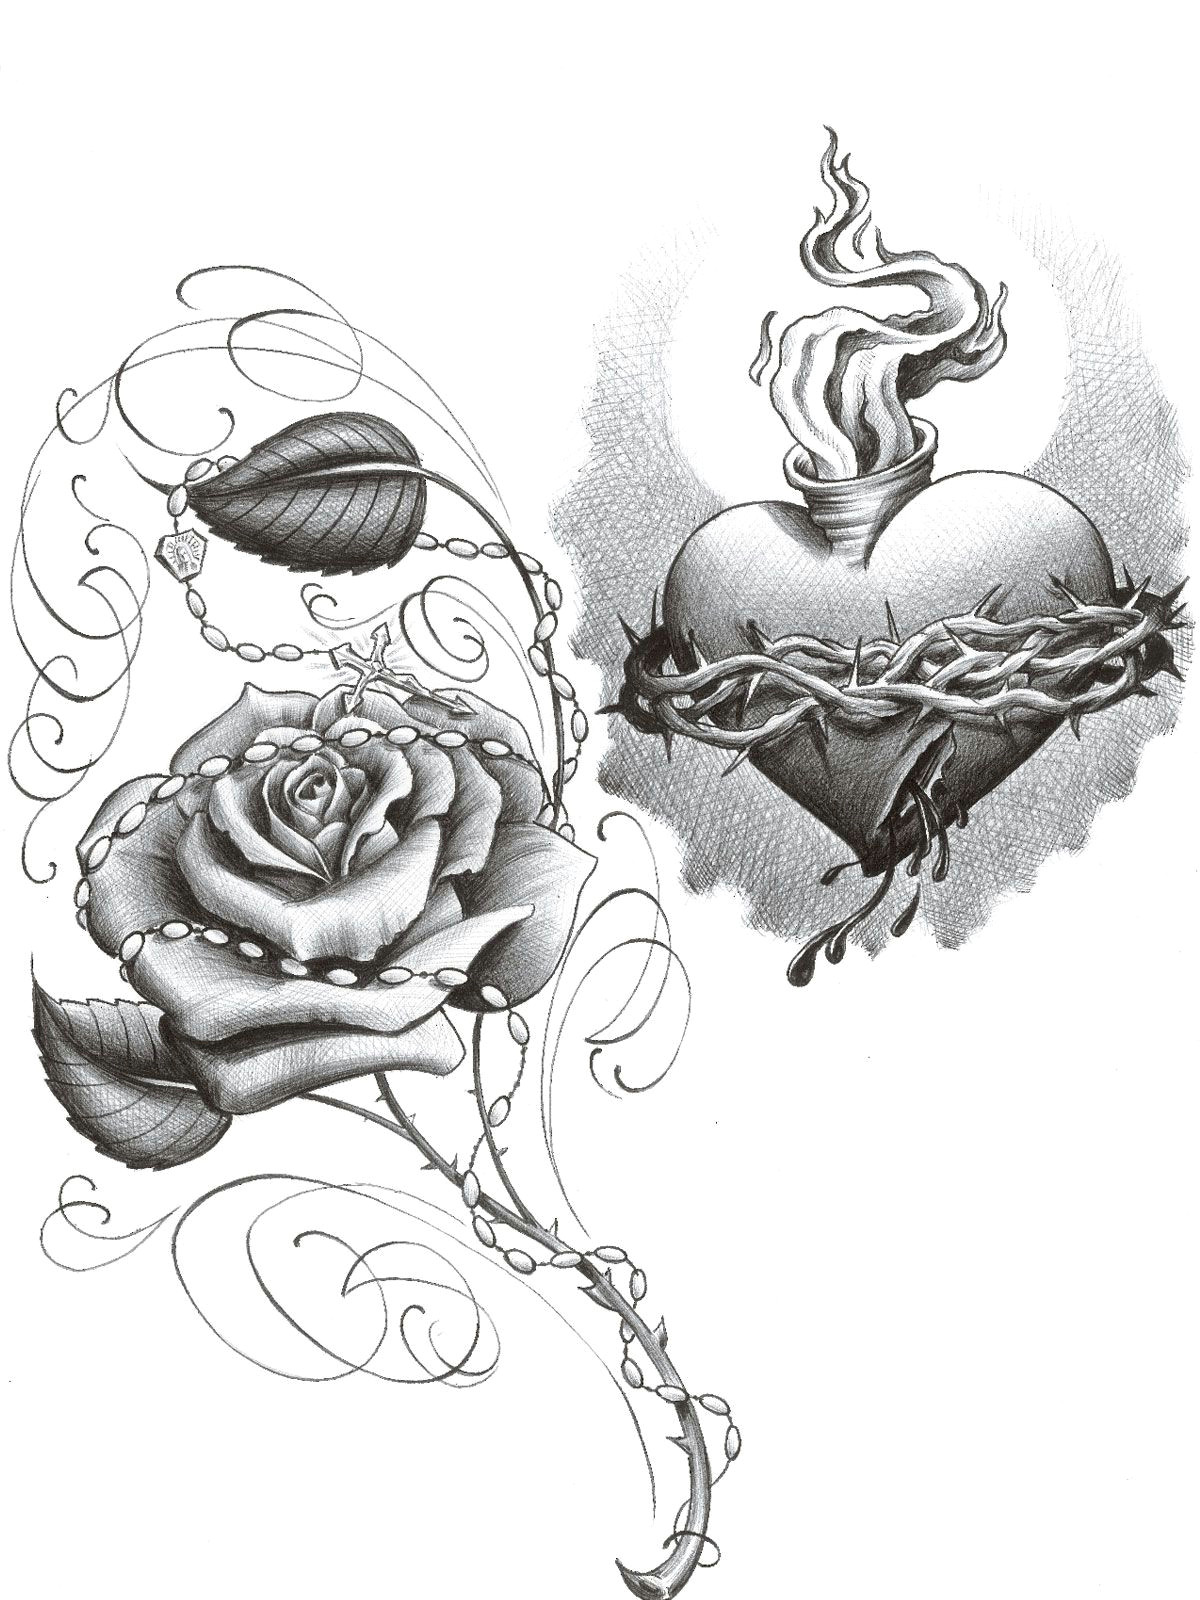 Drawing Of A Dark Rose Lowrider Drawings Pictures Lowrider Art Image Lowrider Art